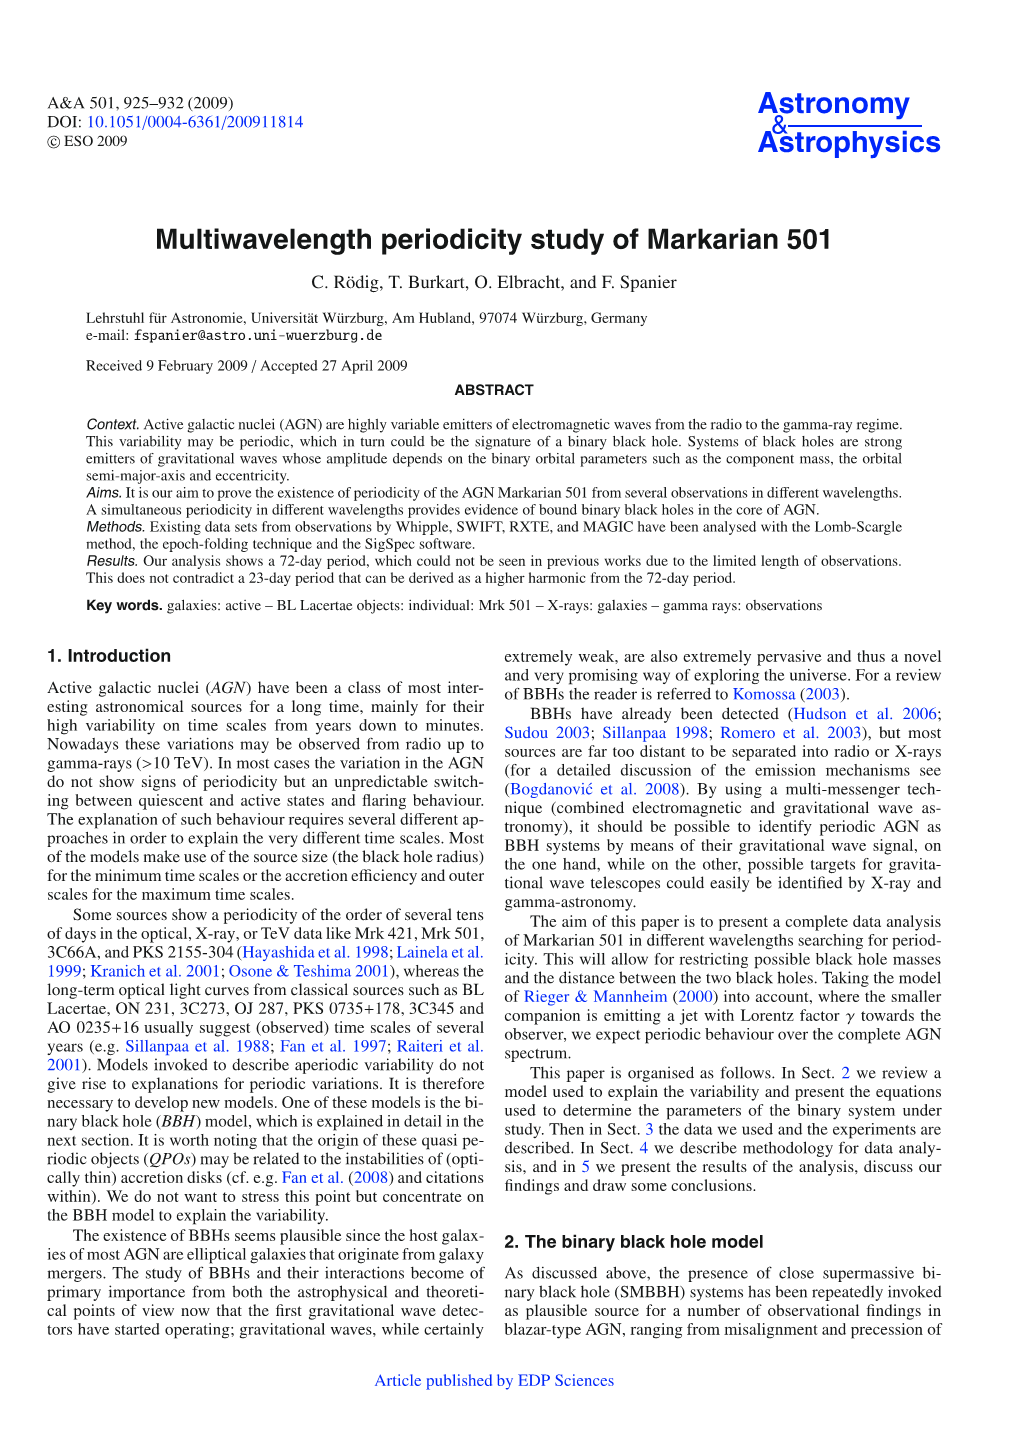 Multiwavelength Periodicity Study of Markarian 501